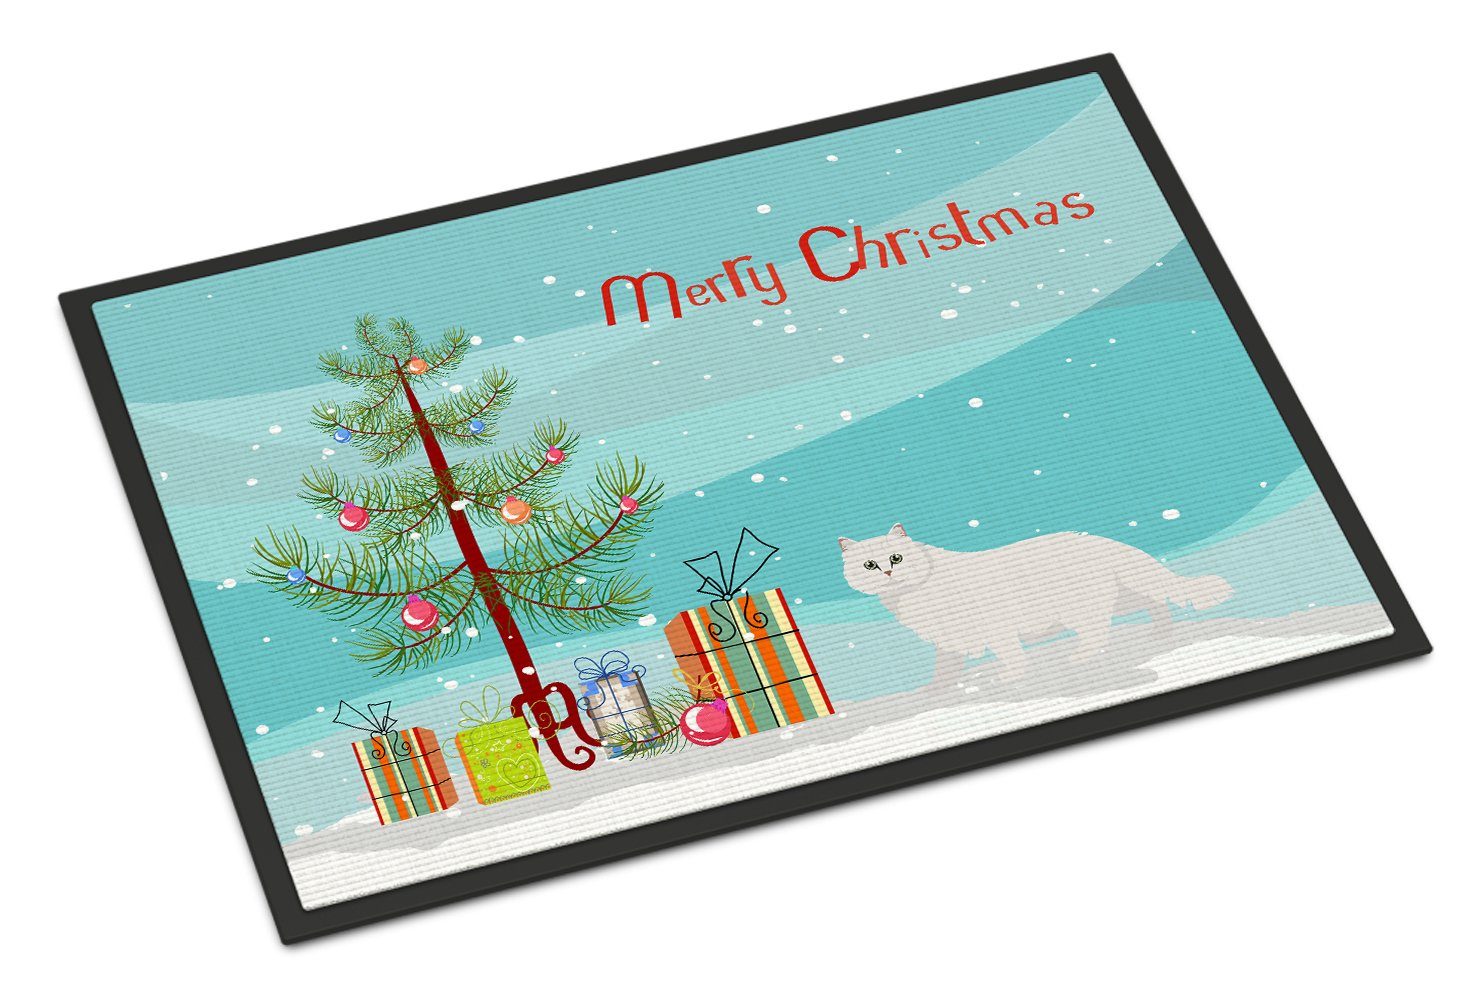 Chinchilla Persian Longhair Cat Merry Christmas Indoor or Outdoor Mat 24x36 CK4589JMAT by Caroline's Treasures